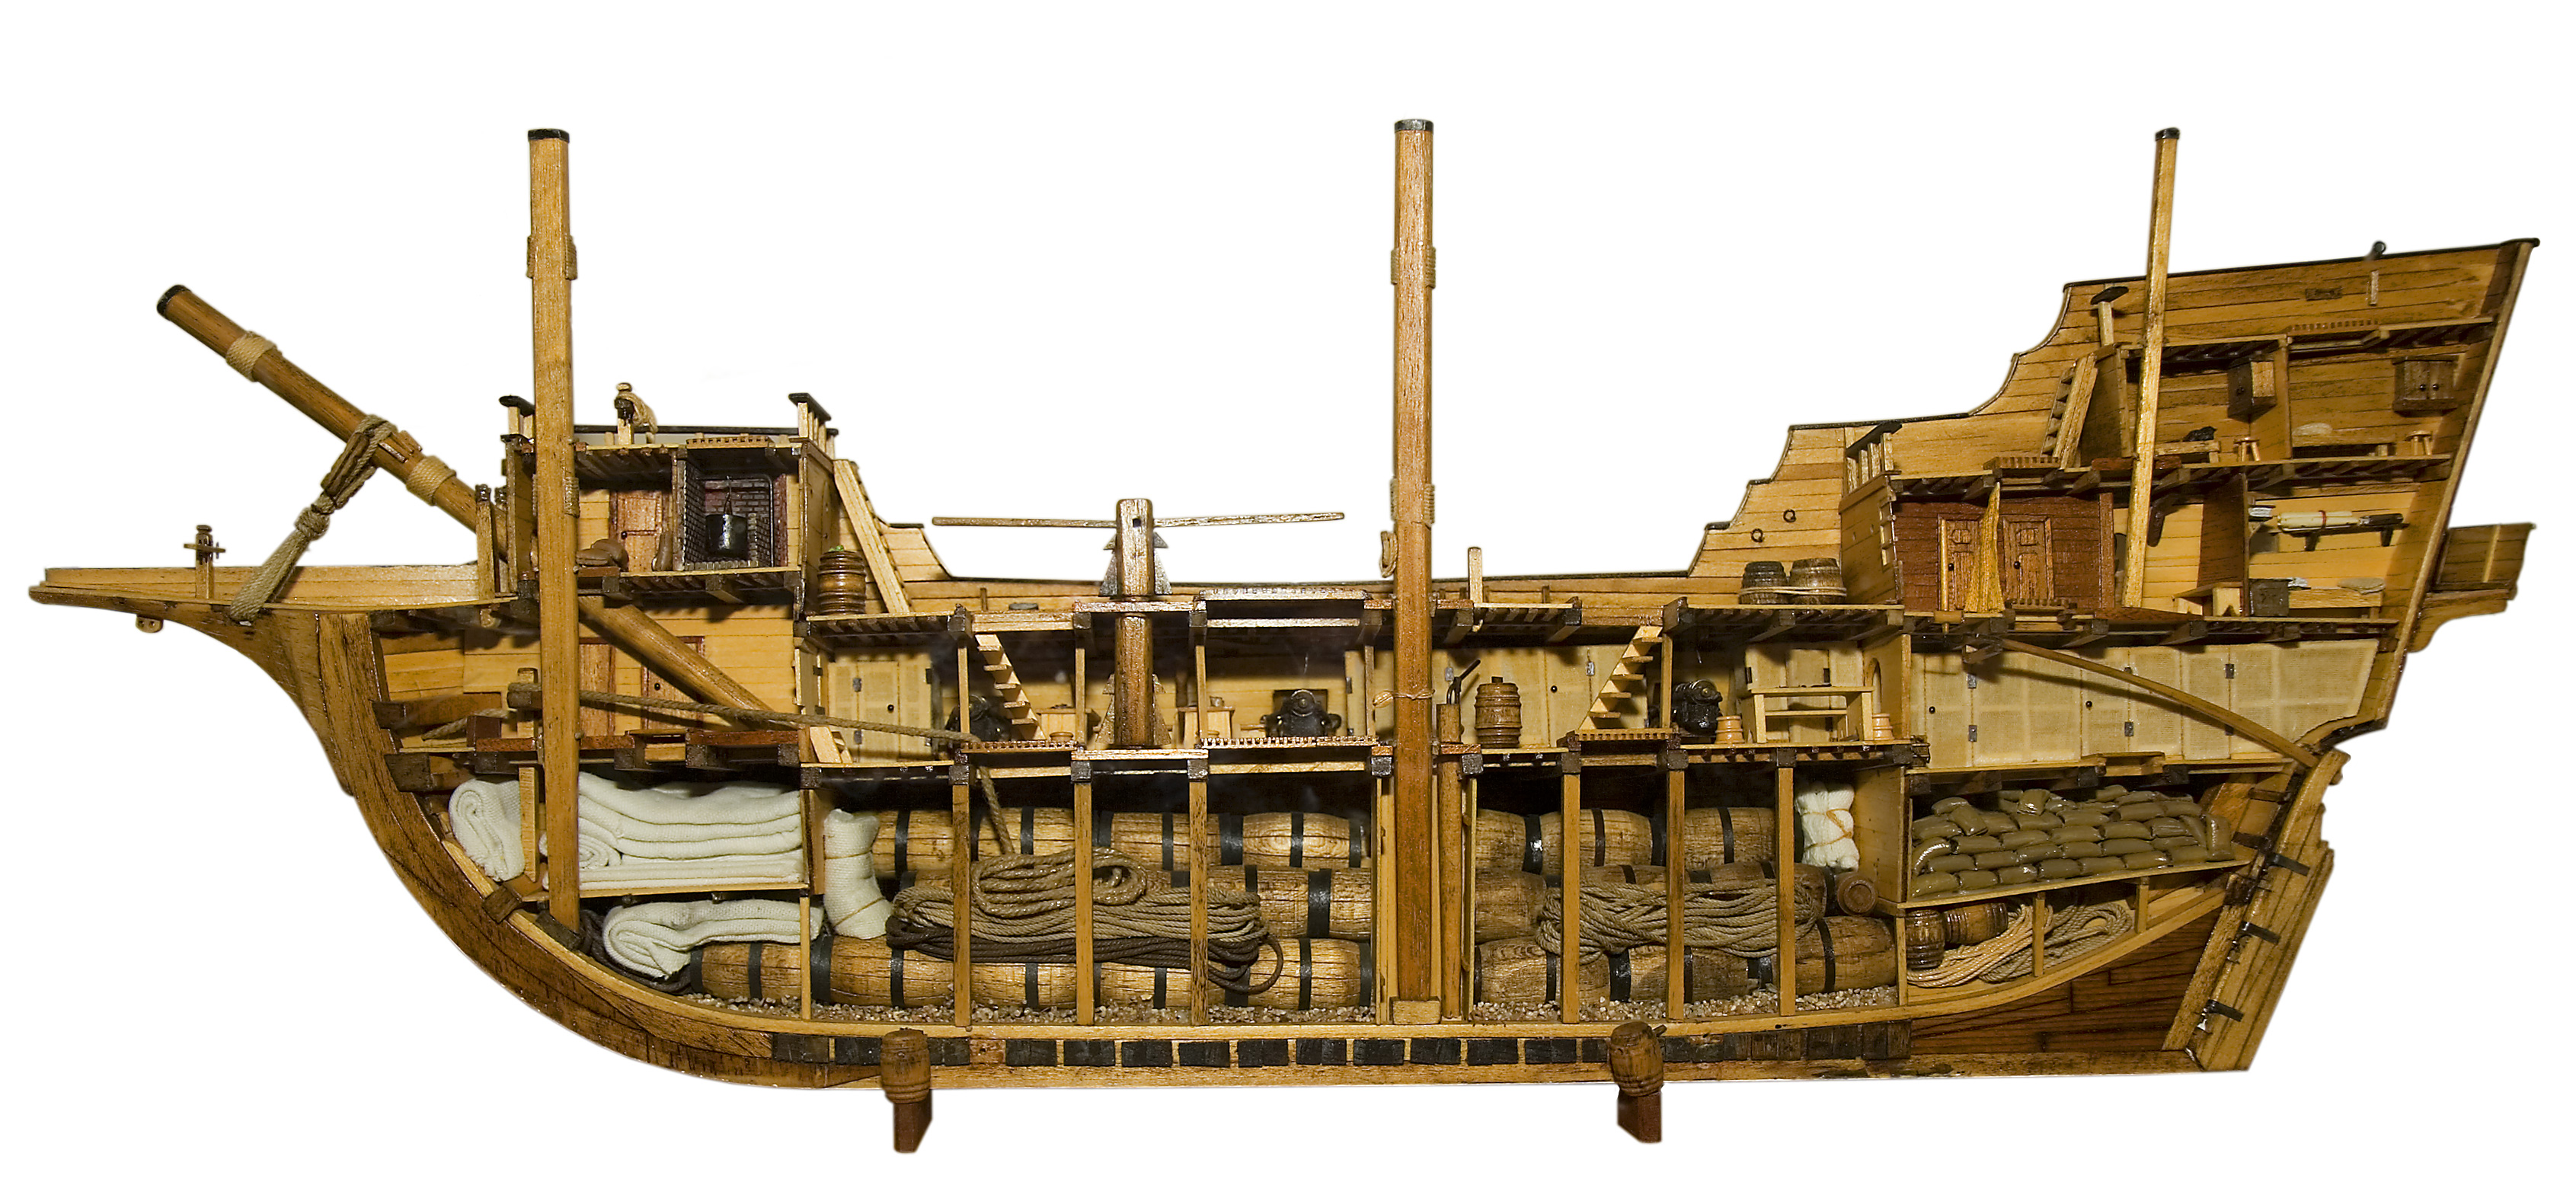 17th Century Merchantman Cutaway model, Wikimedia Commons